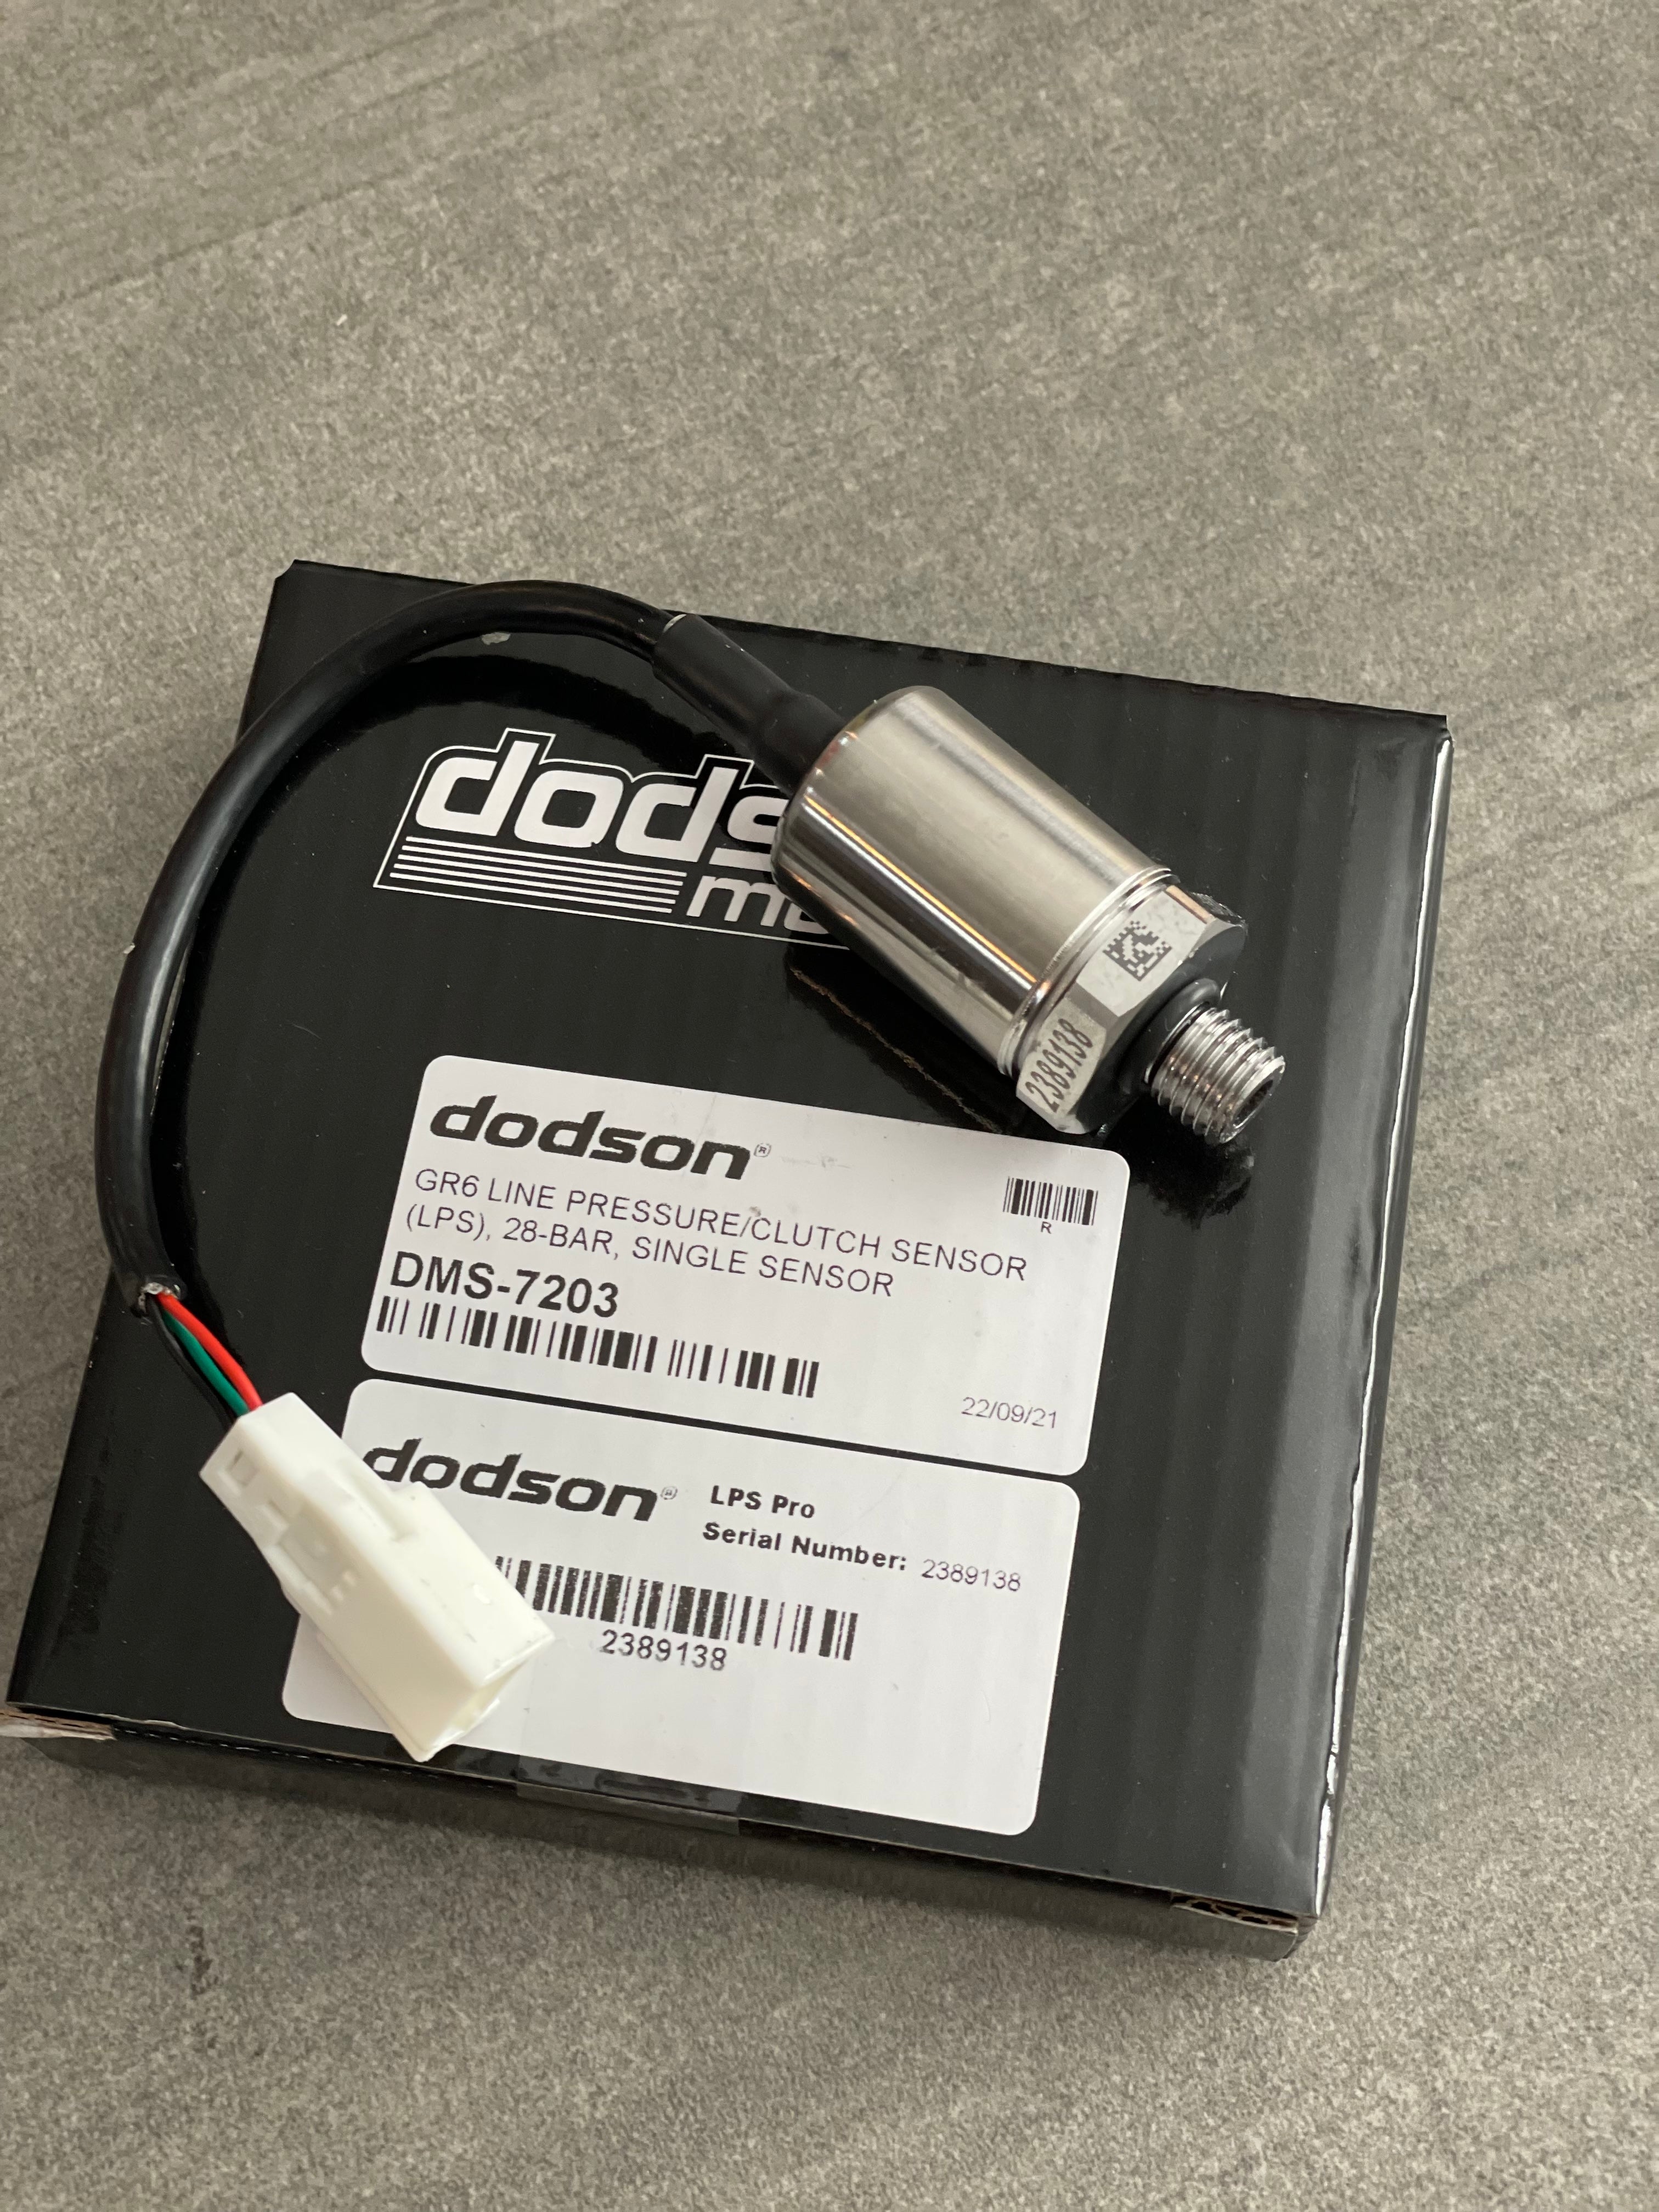 DODSON DMS-7203 Line pressure/clutch sensor (lps), single sensor (oe scaling) for NISSAN GT-R (R35) Photo-0 